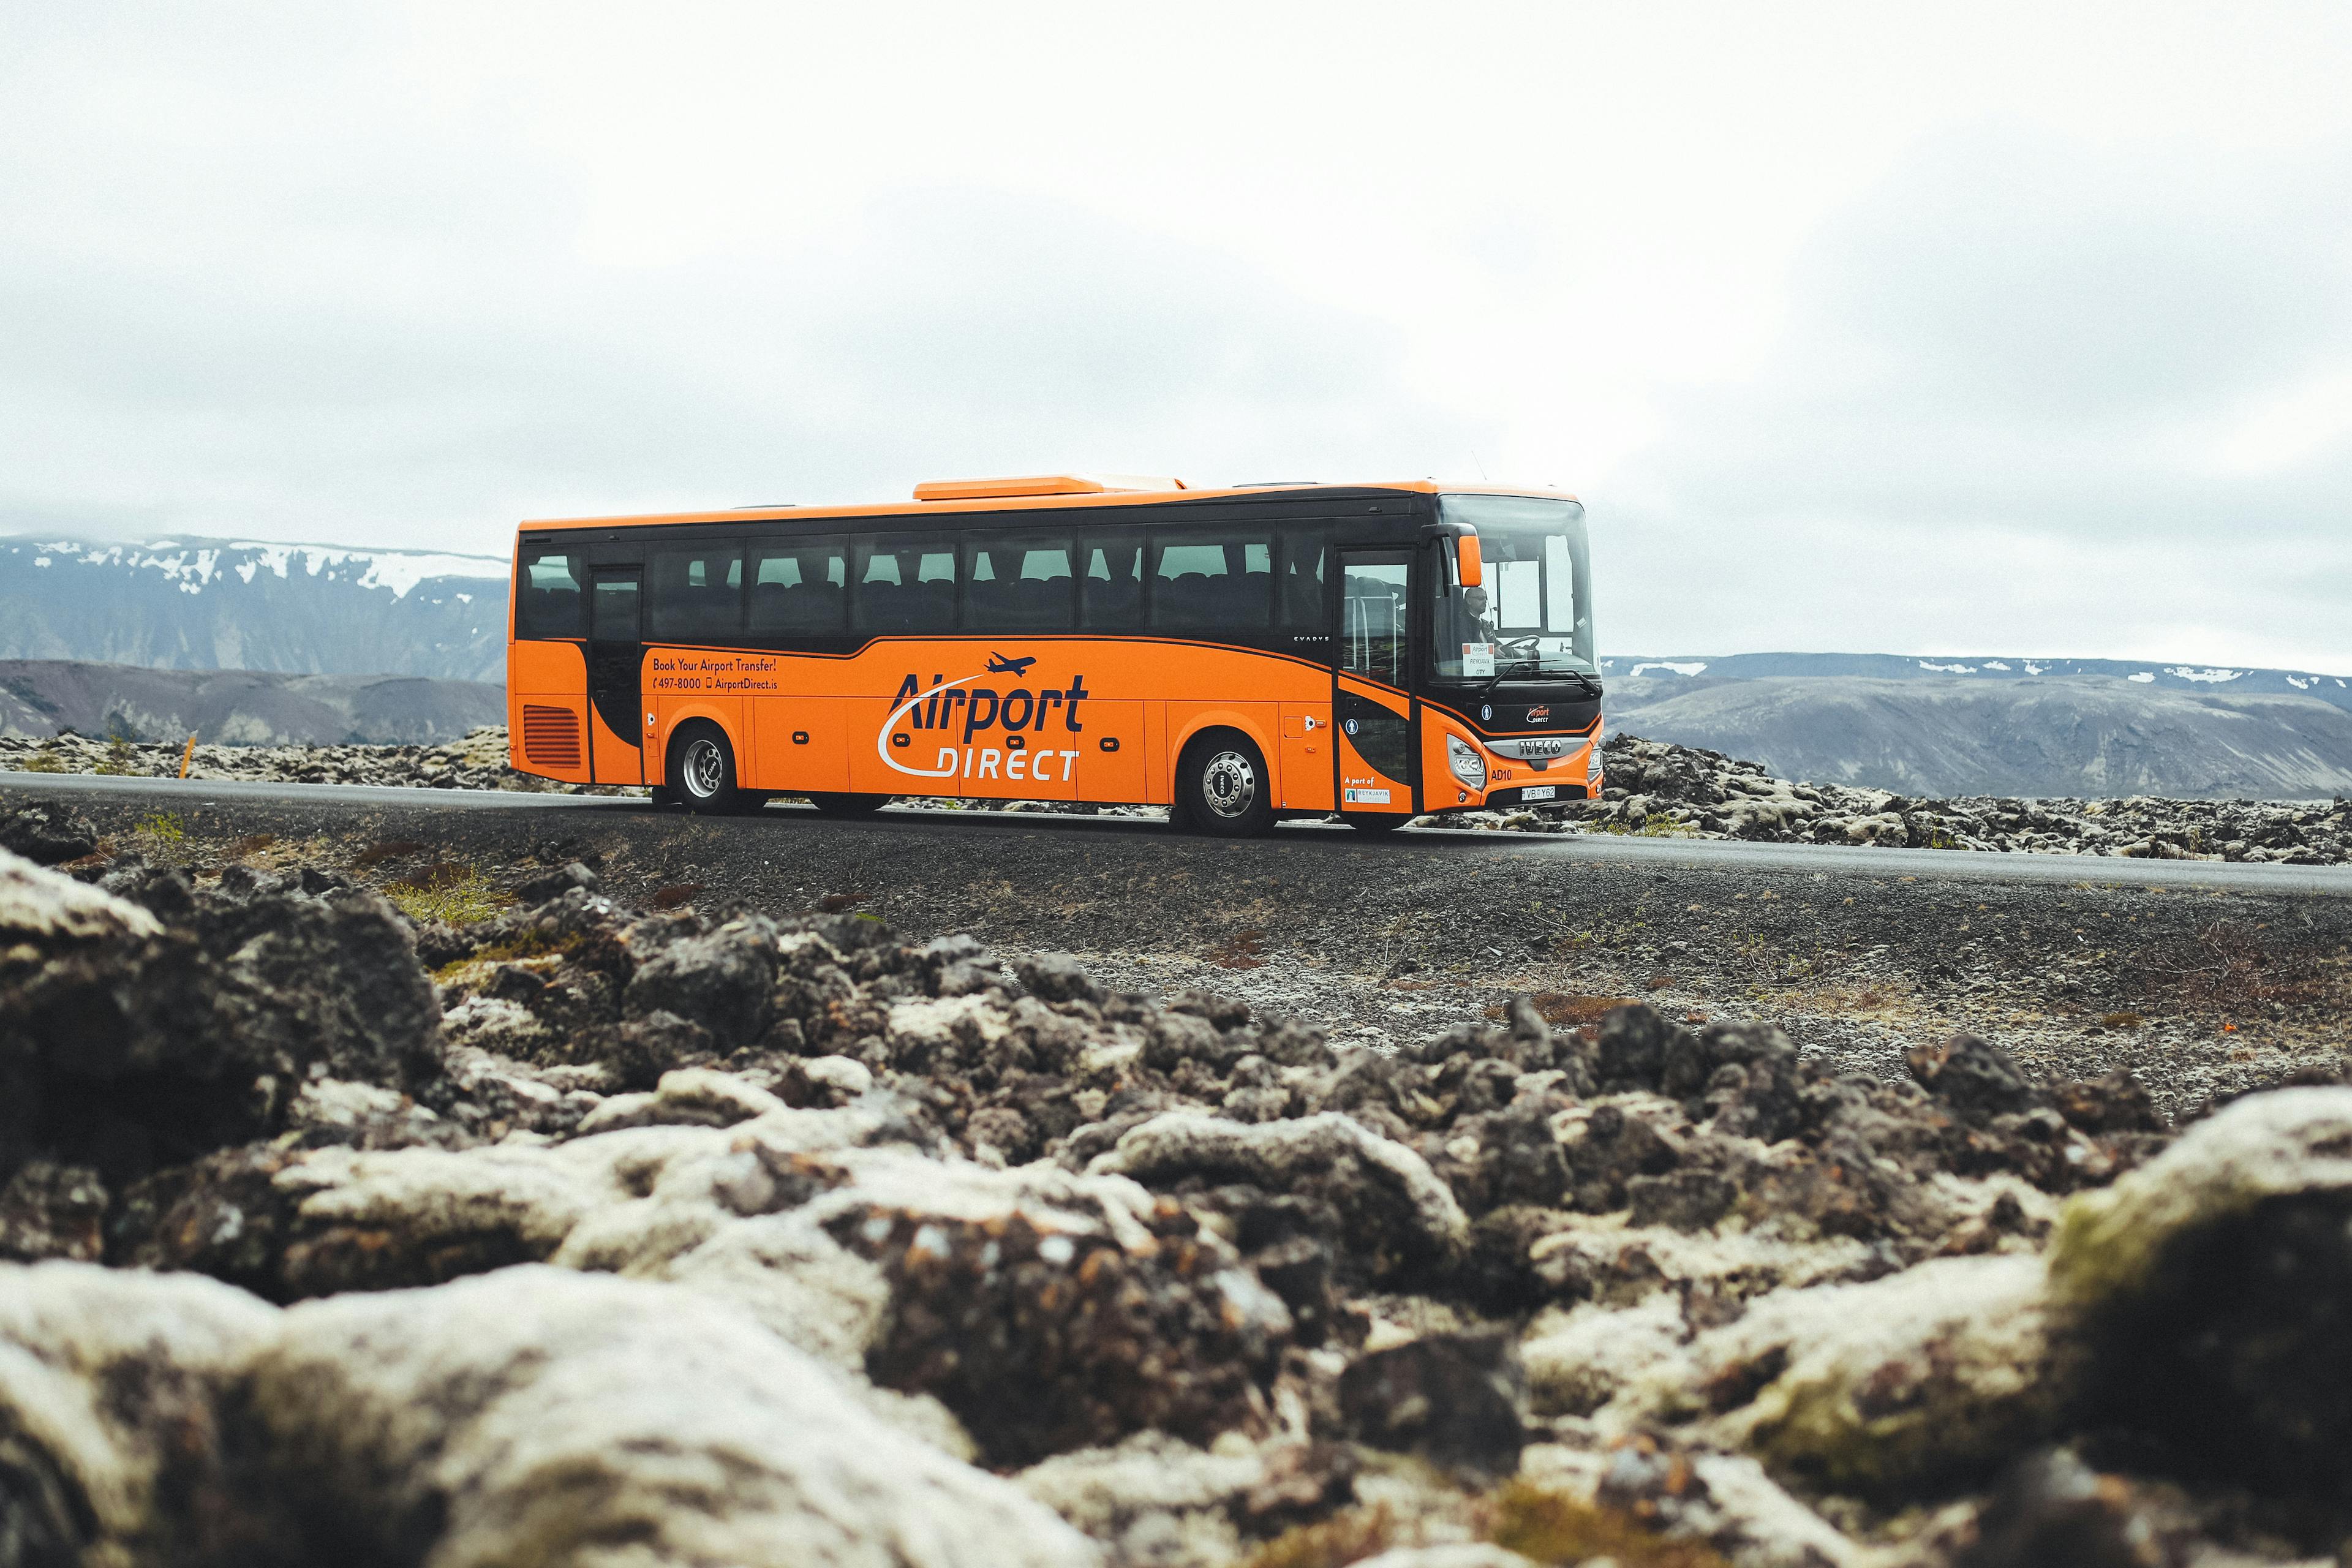 Economy transfer from your hotel in Reykjavík City to Keflavík Airport